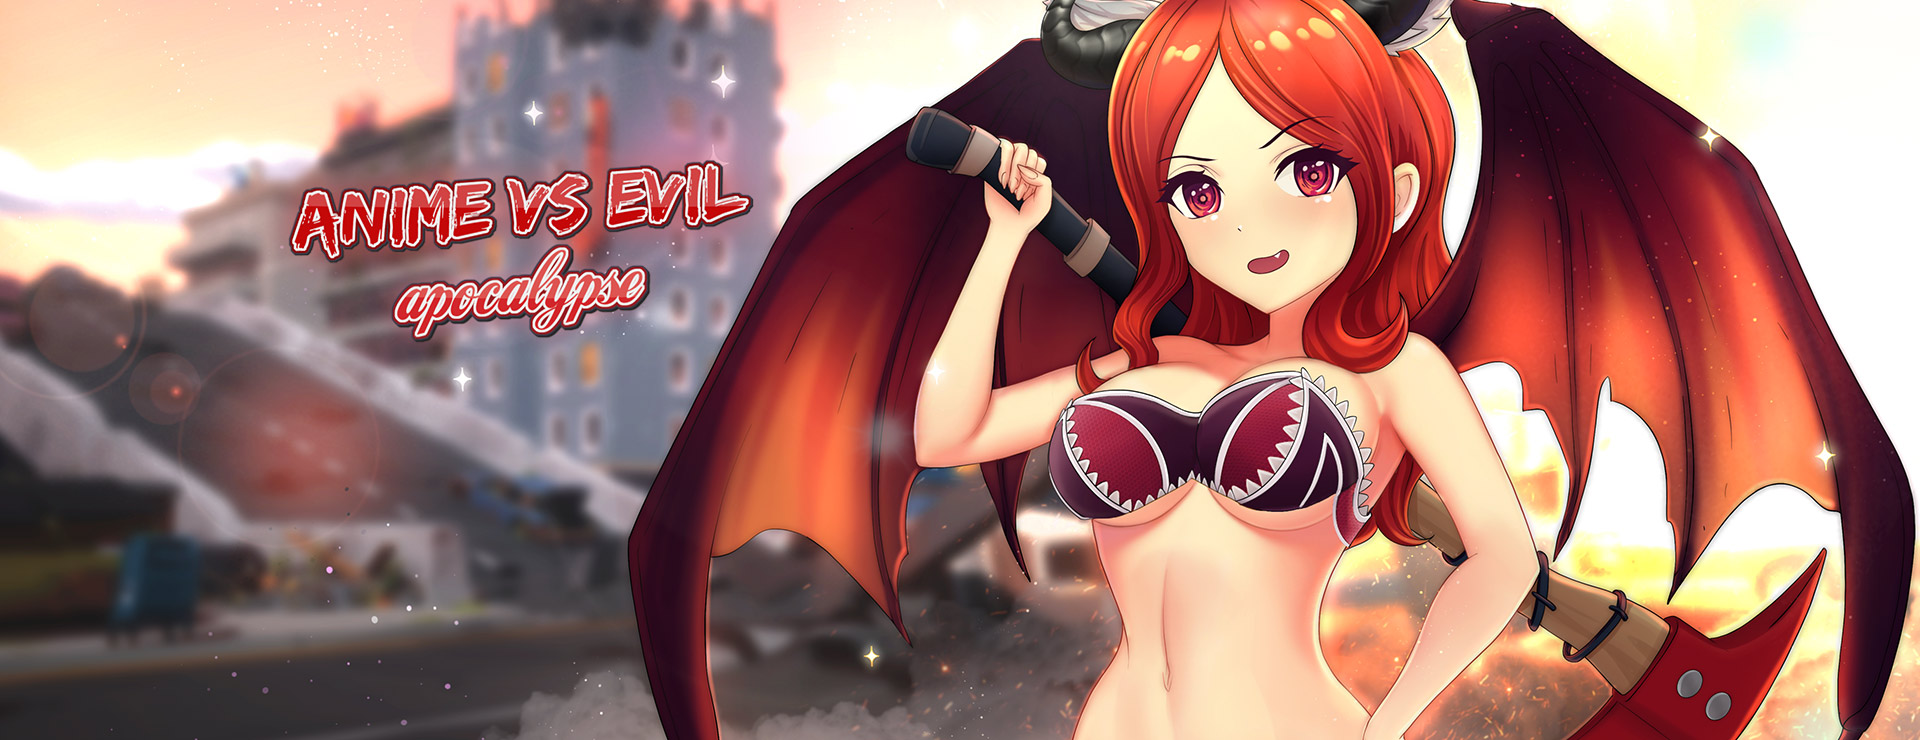 Anime vs Evil Apocalypse - アドベンチャー ゲーム